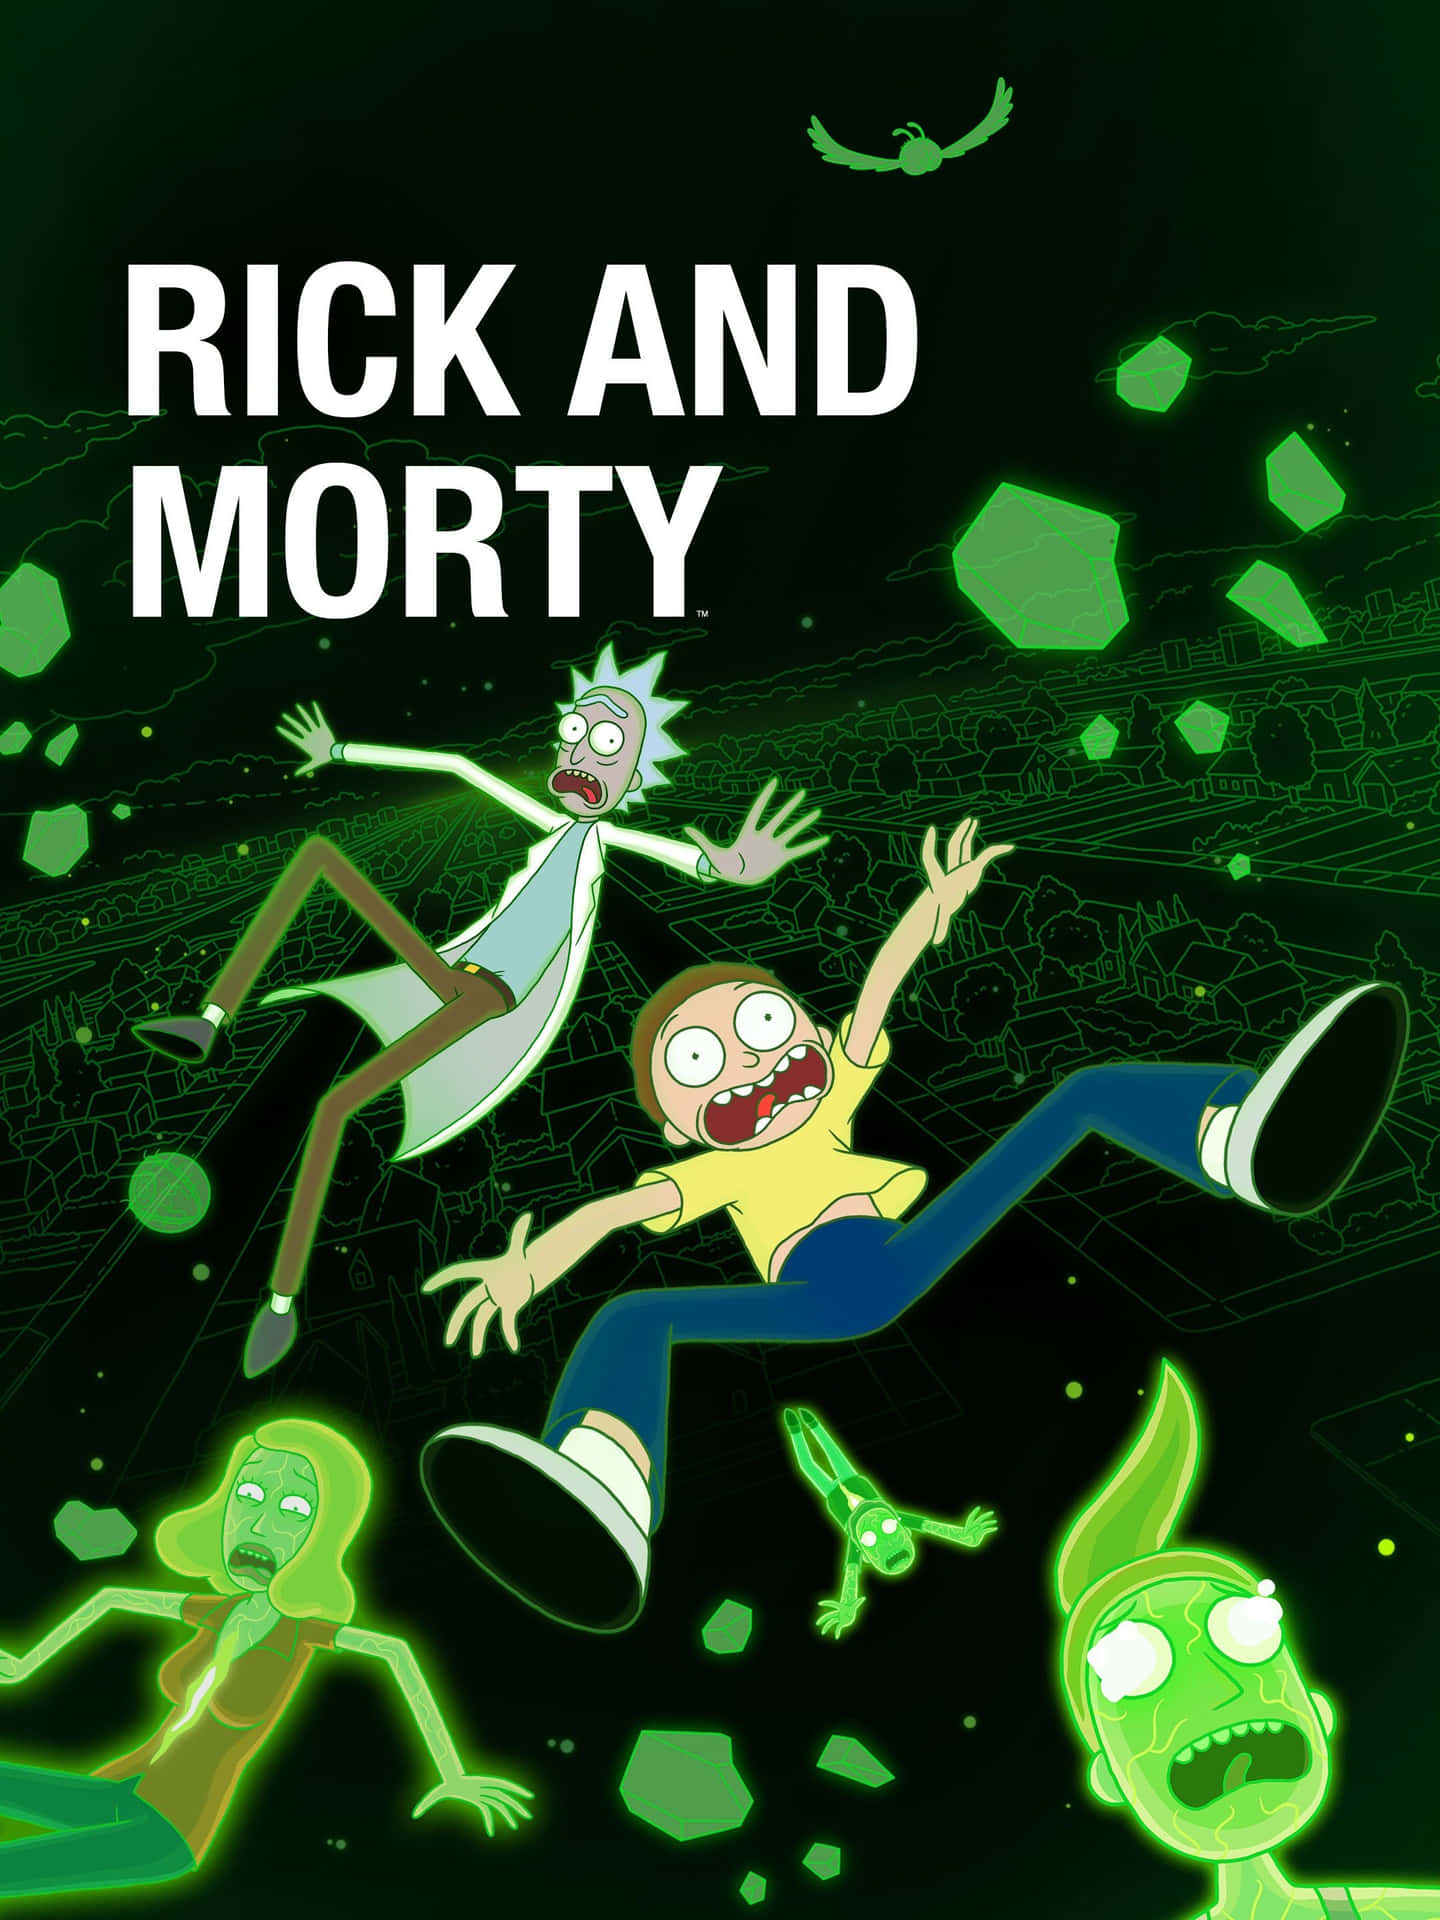 Rick and Morty, an interdimensional adventure